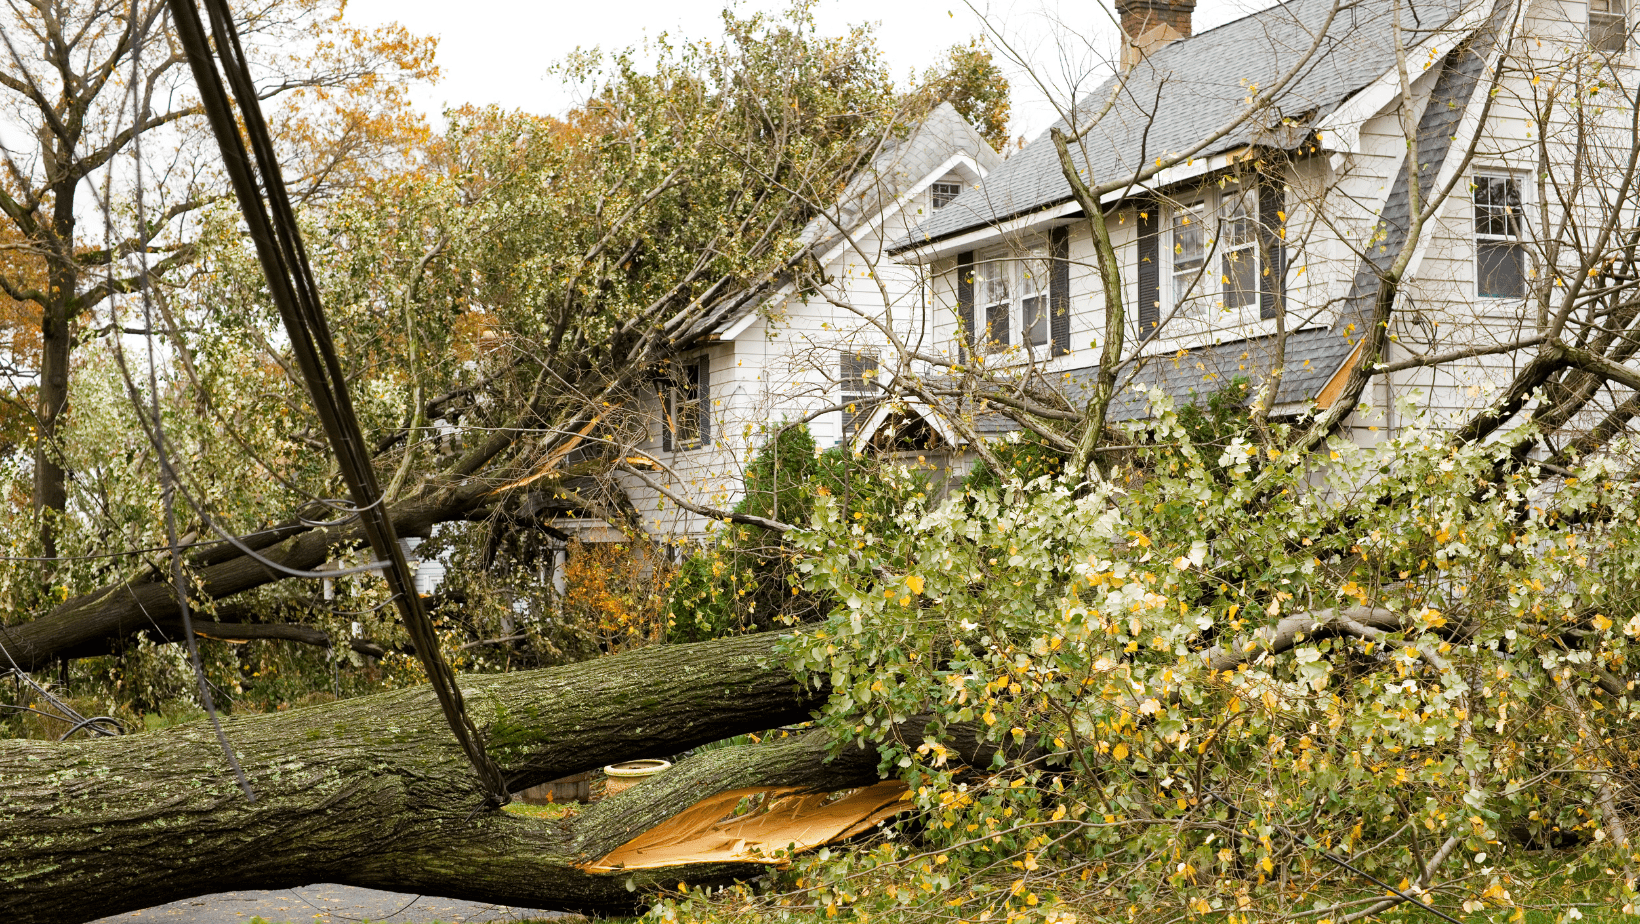 5 Common Types of Hurricane Damage